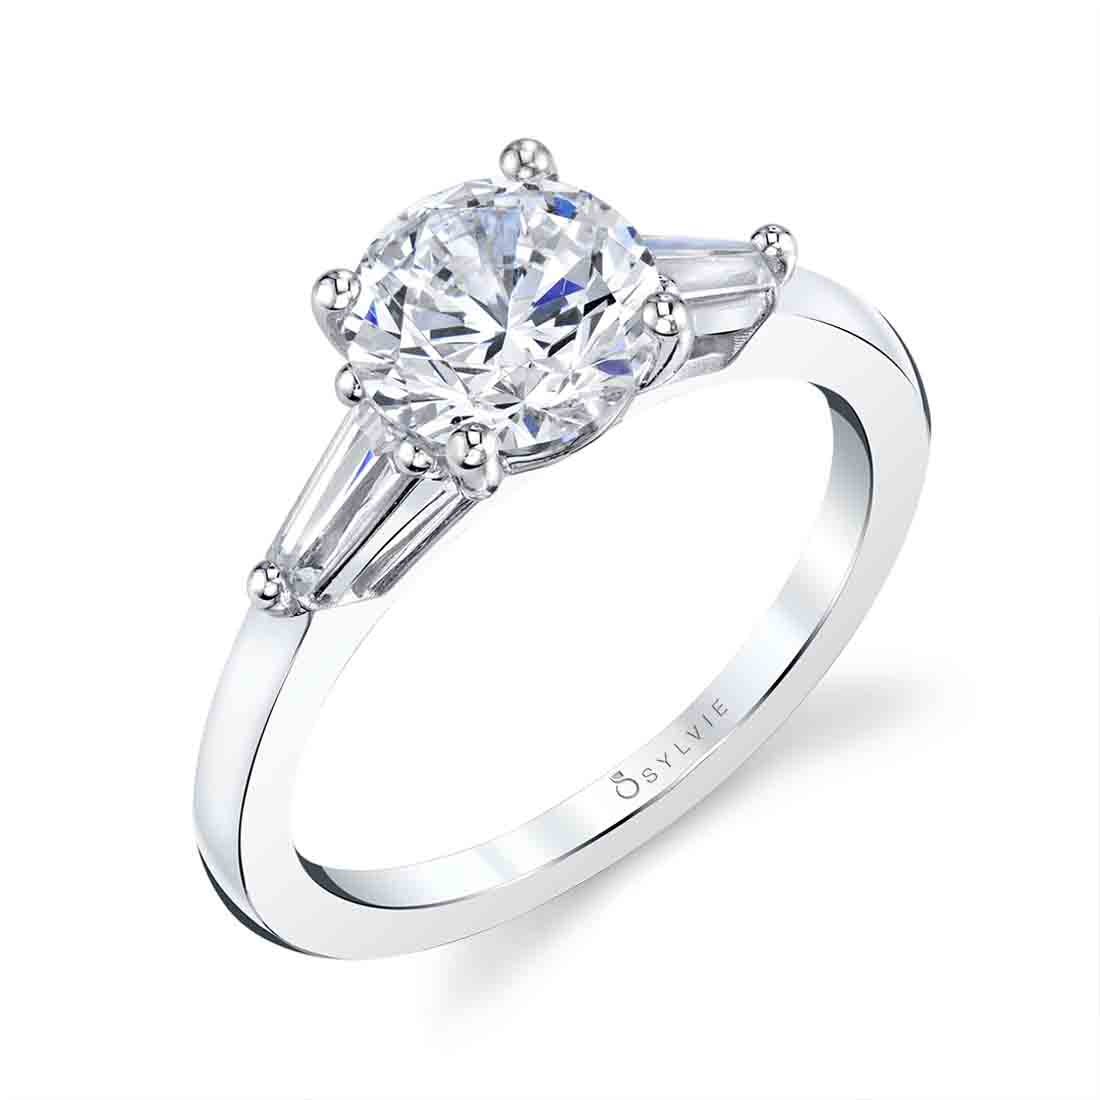 Three Stone Engagement Ring with Baguette Diamonds - Nicolette Stuart Benjamin & Co. Jewelry Designs San Diego, CA